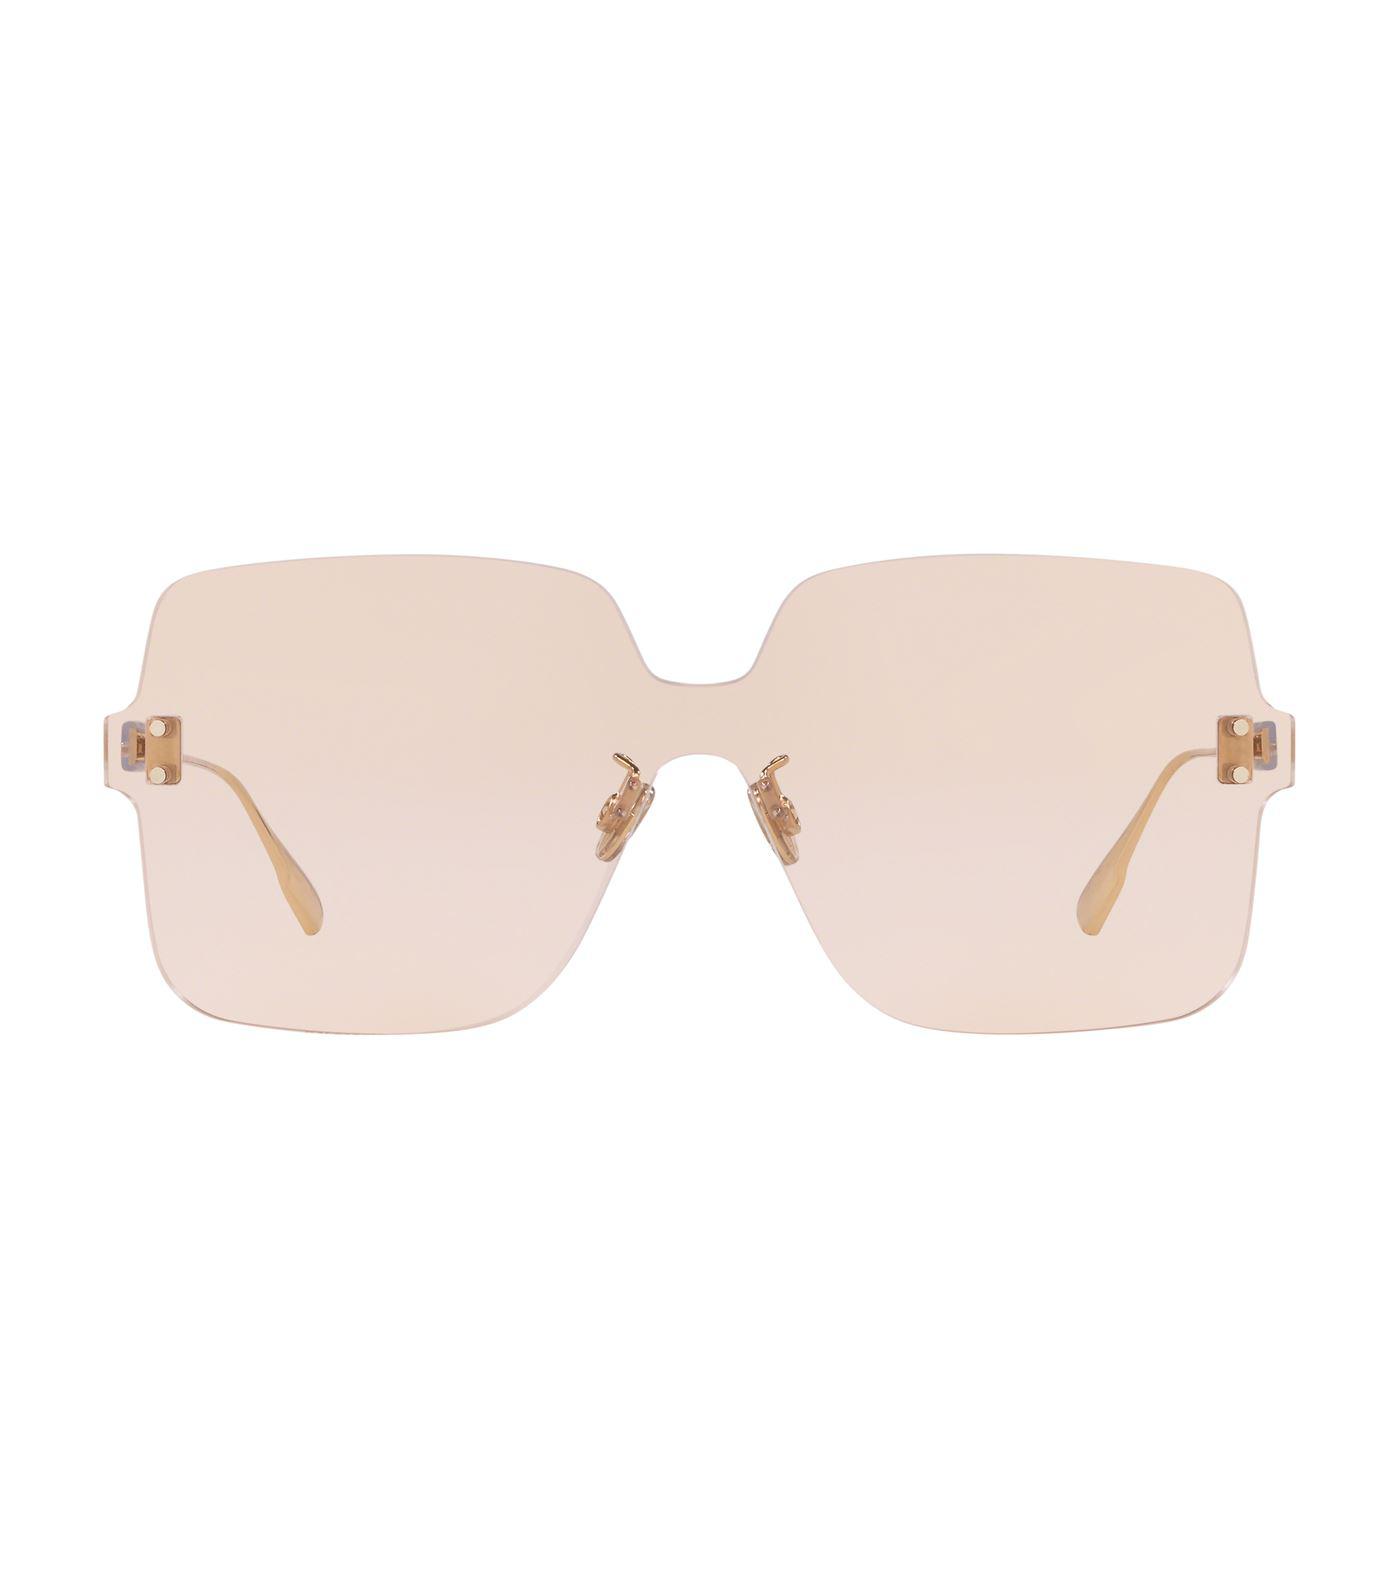 Dior Color Quake 1 Sunglasses in Pink | Lyst UK